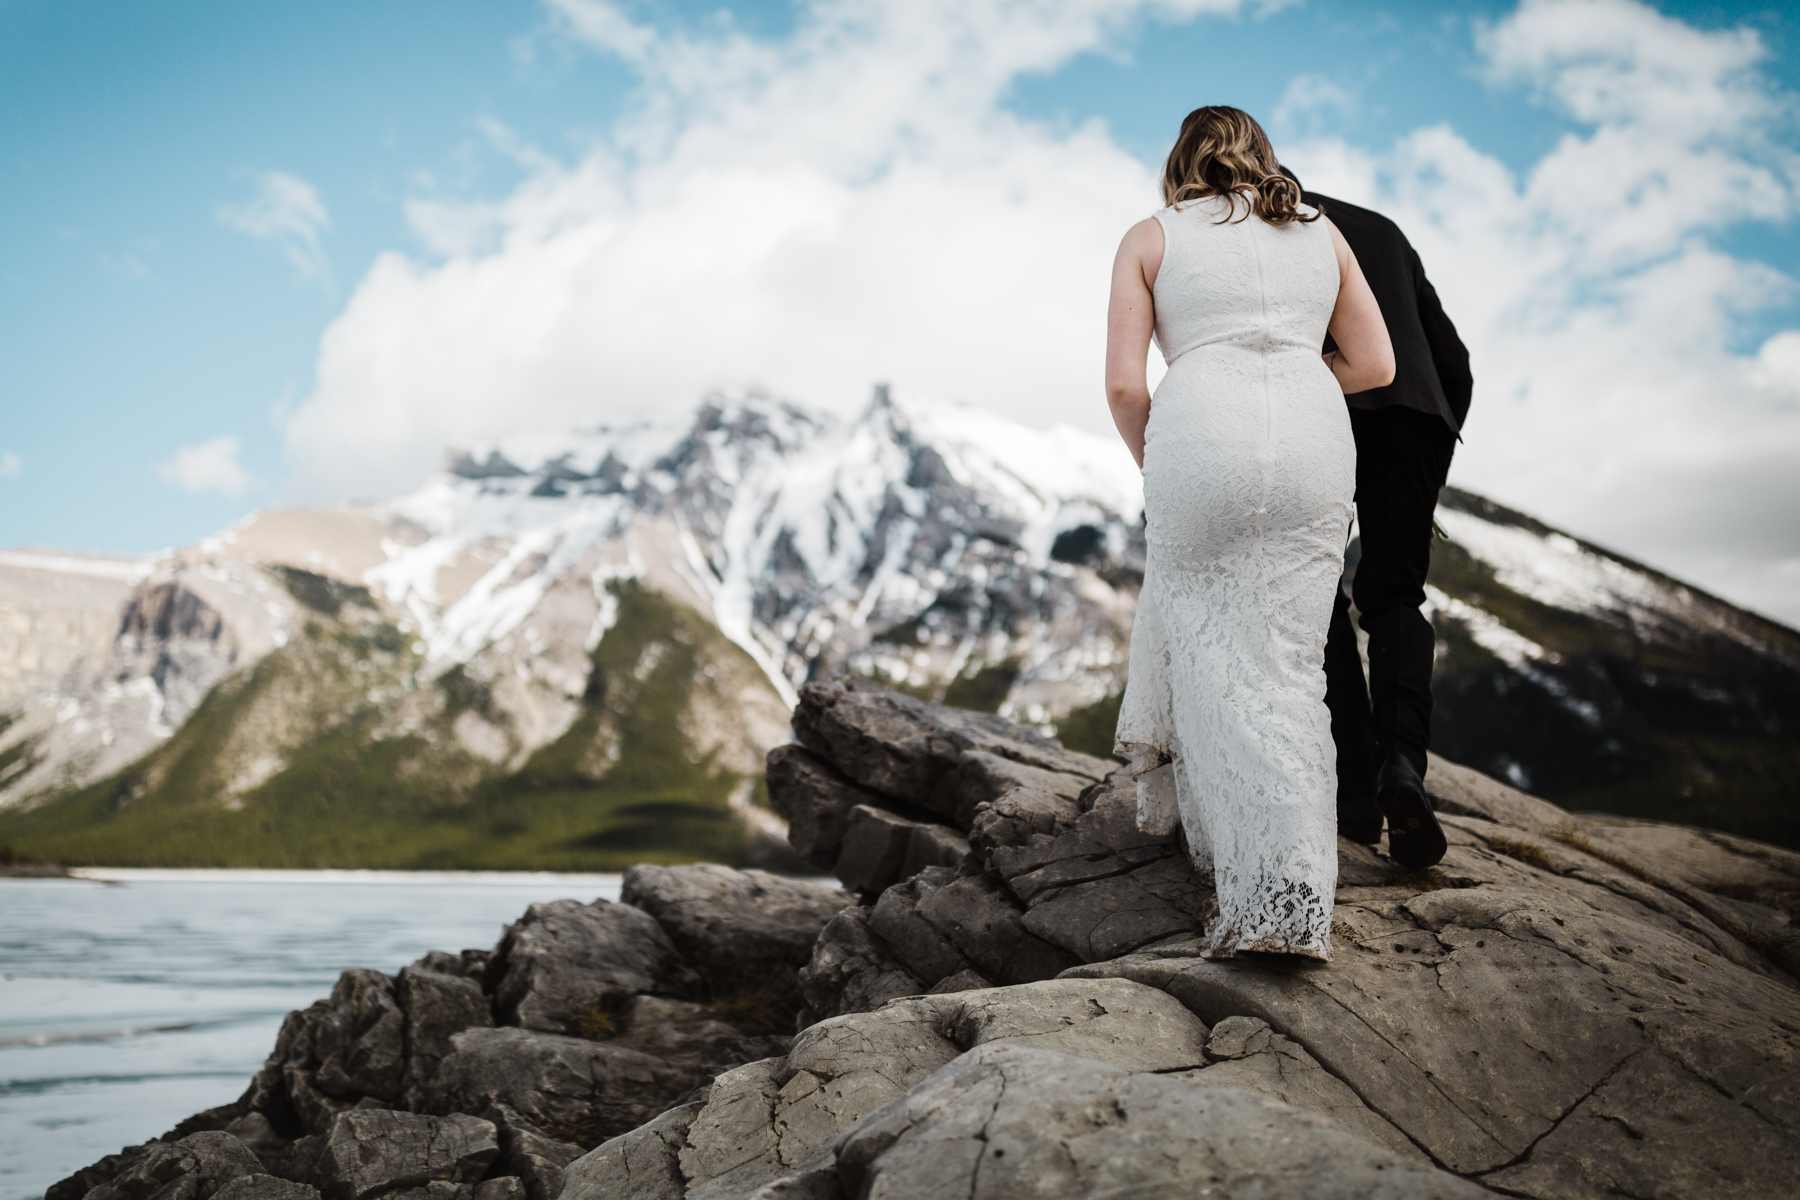 Banff Adventure Wedding Photographers for Lake Minnewanka Elopement - Image 24